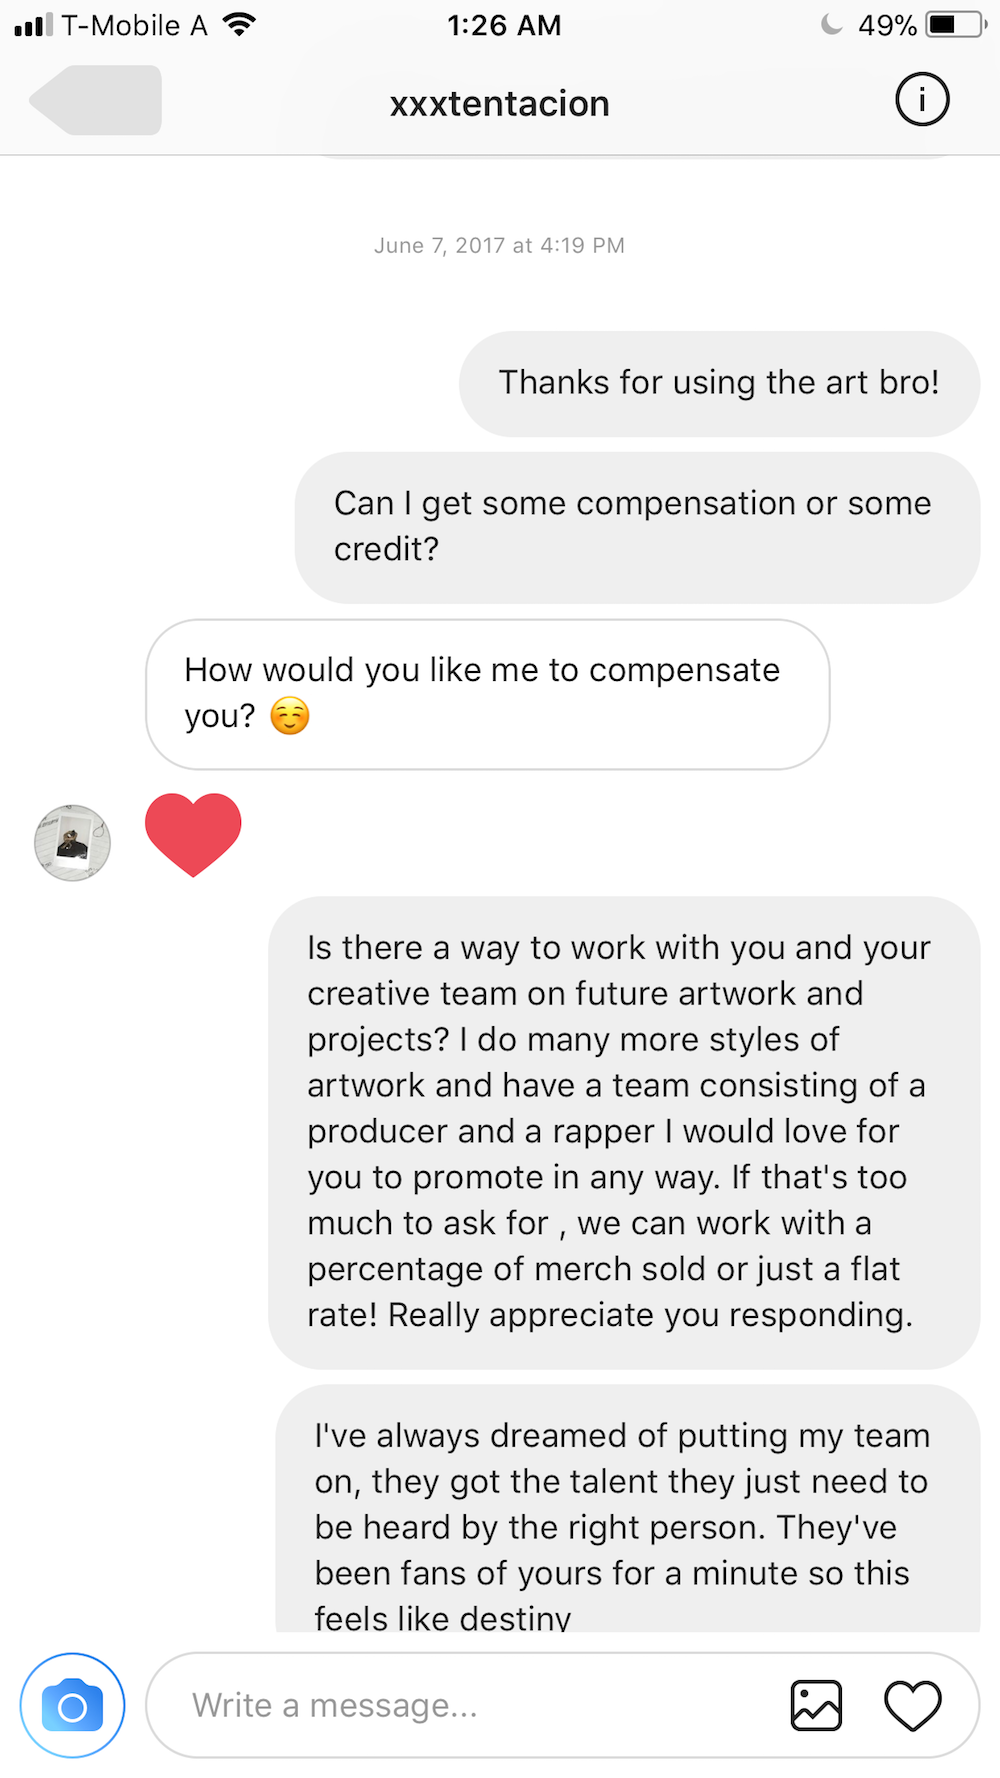 XXXTentacion Tells Artist to 